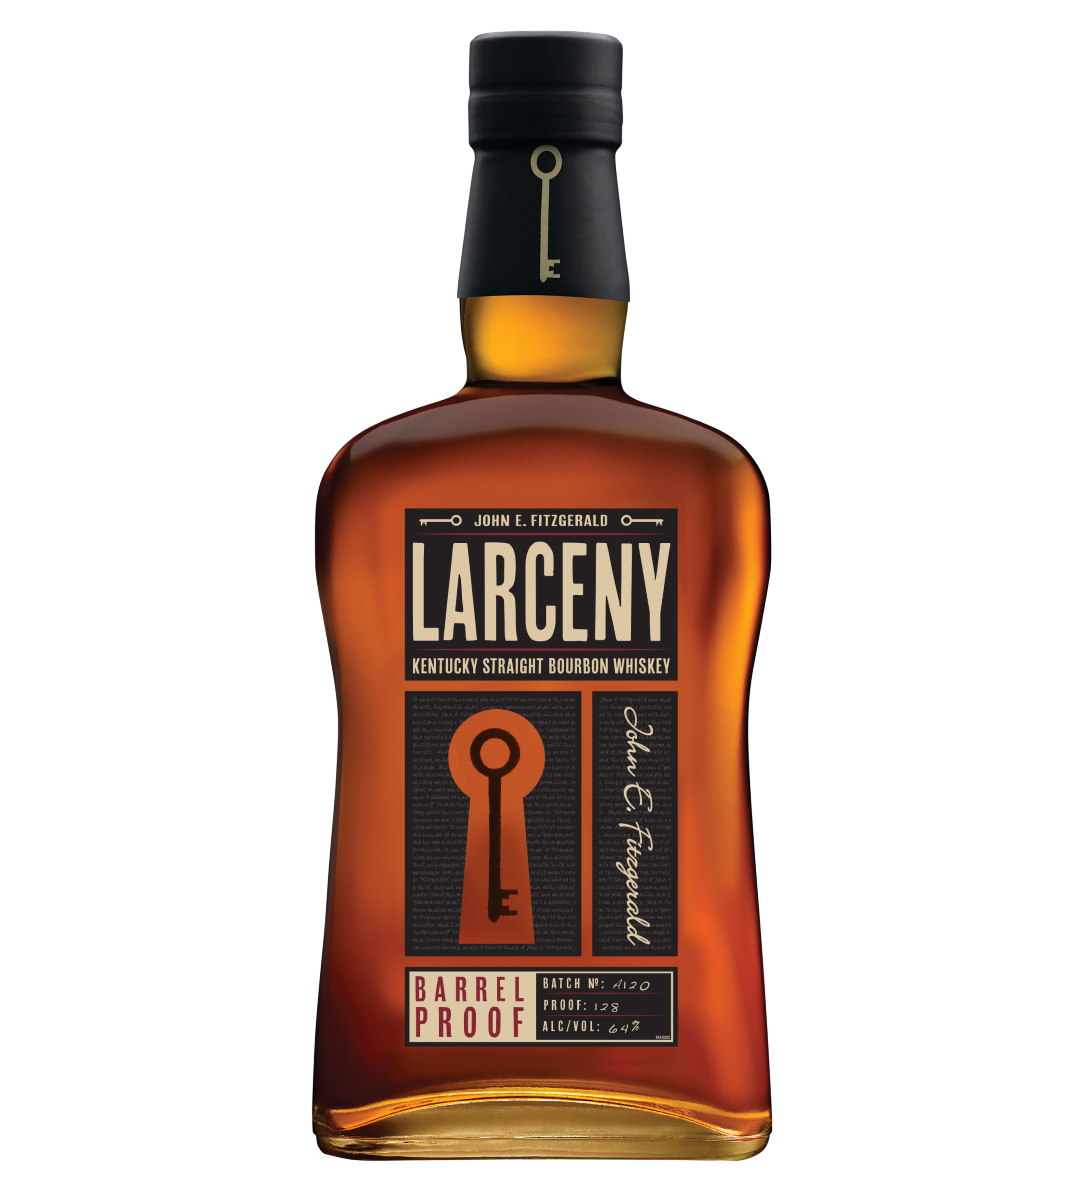 Larceny Barrel Proof Bourbon Batch C920 (September 2020)